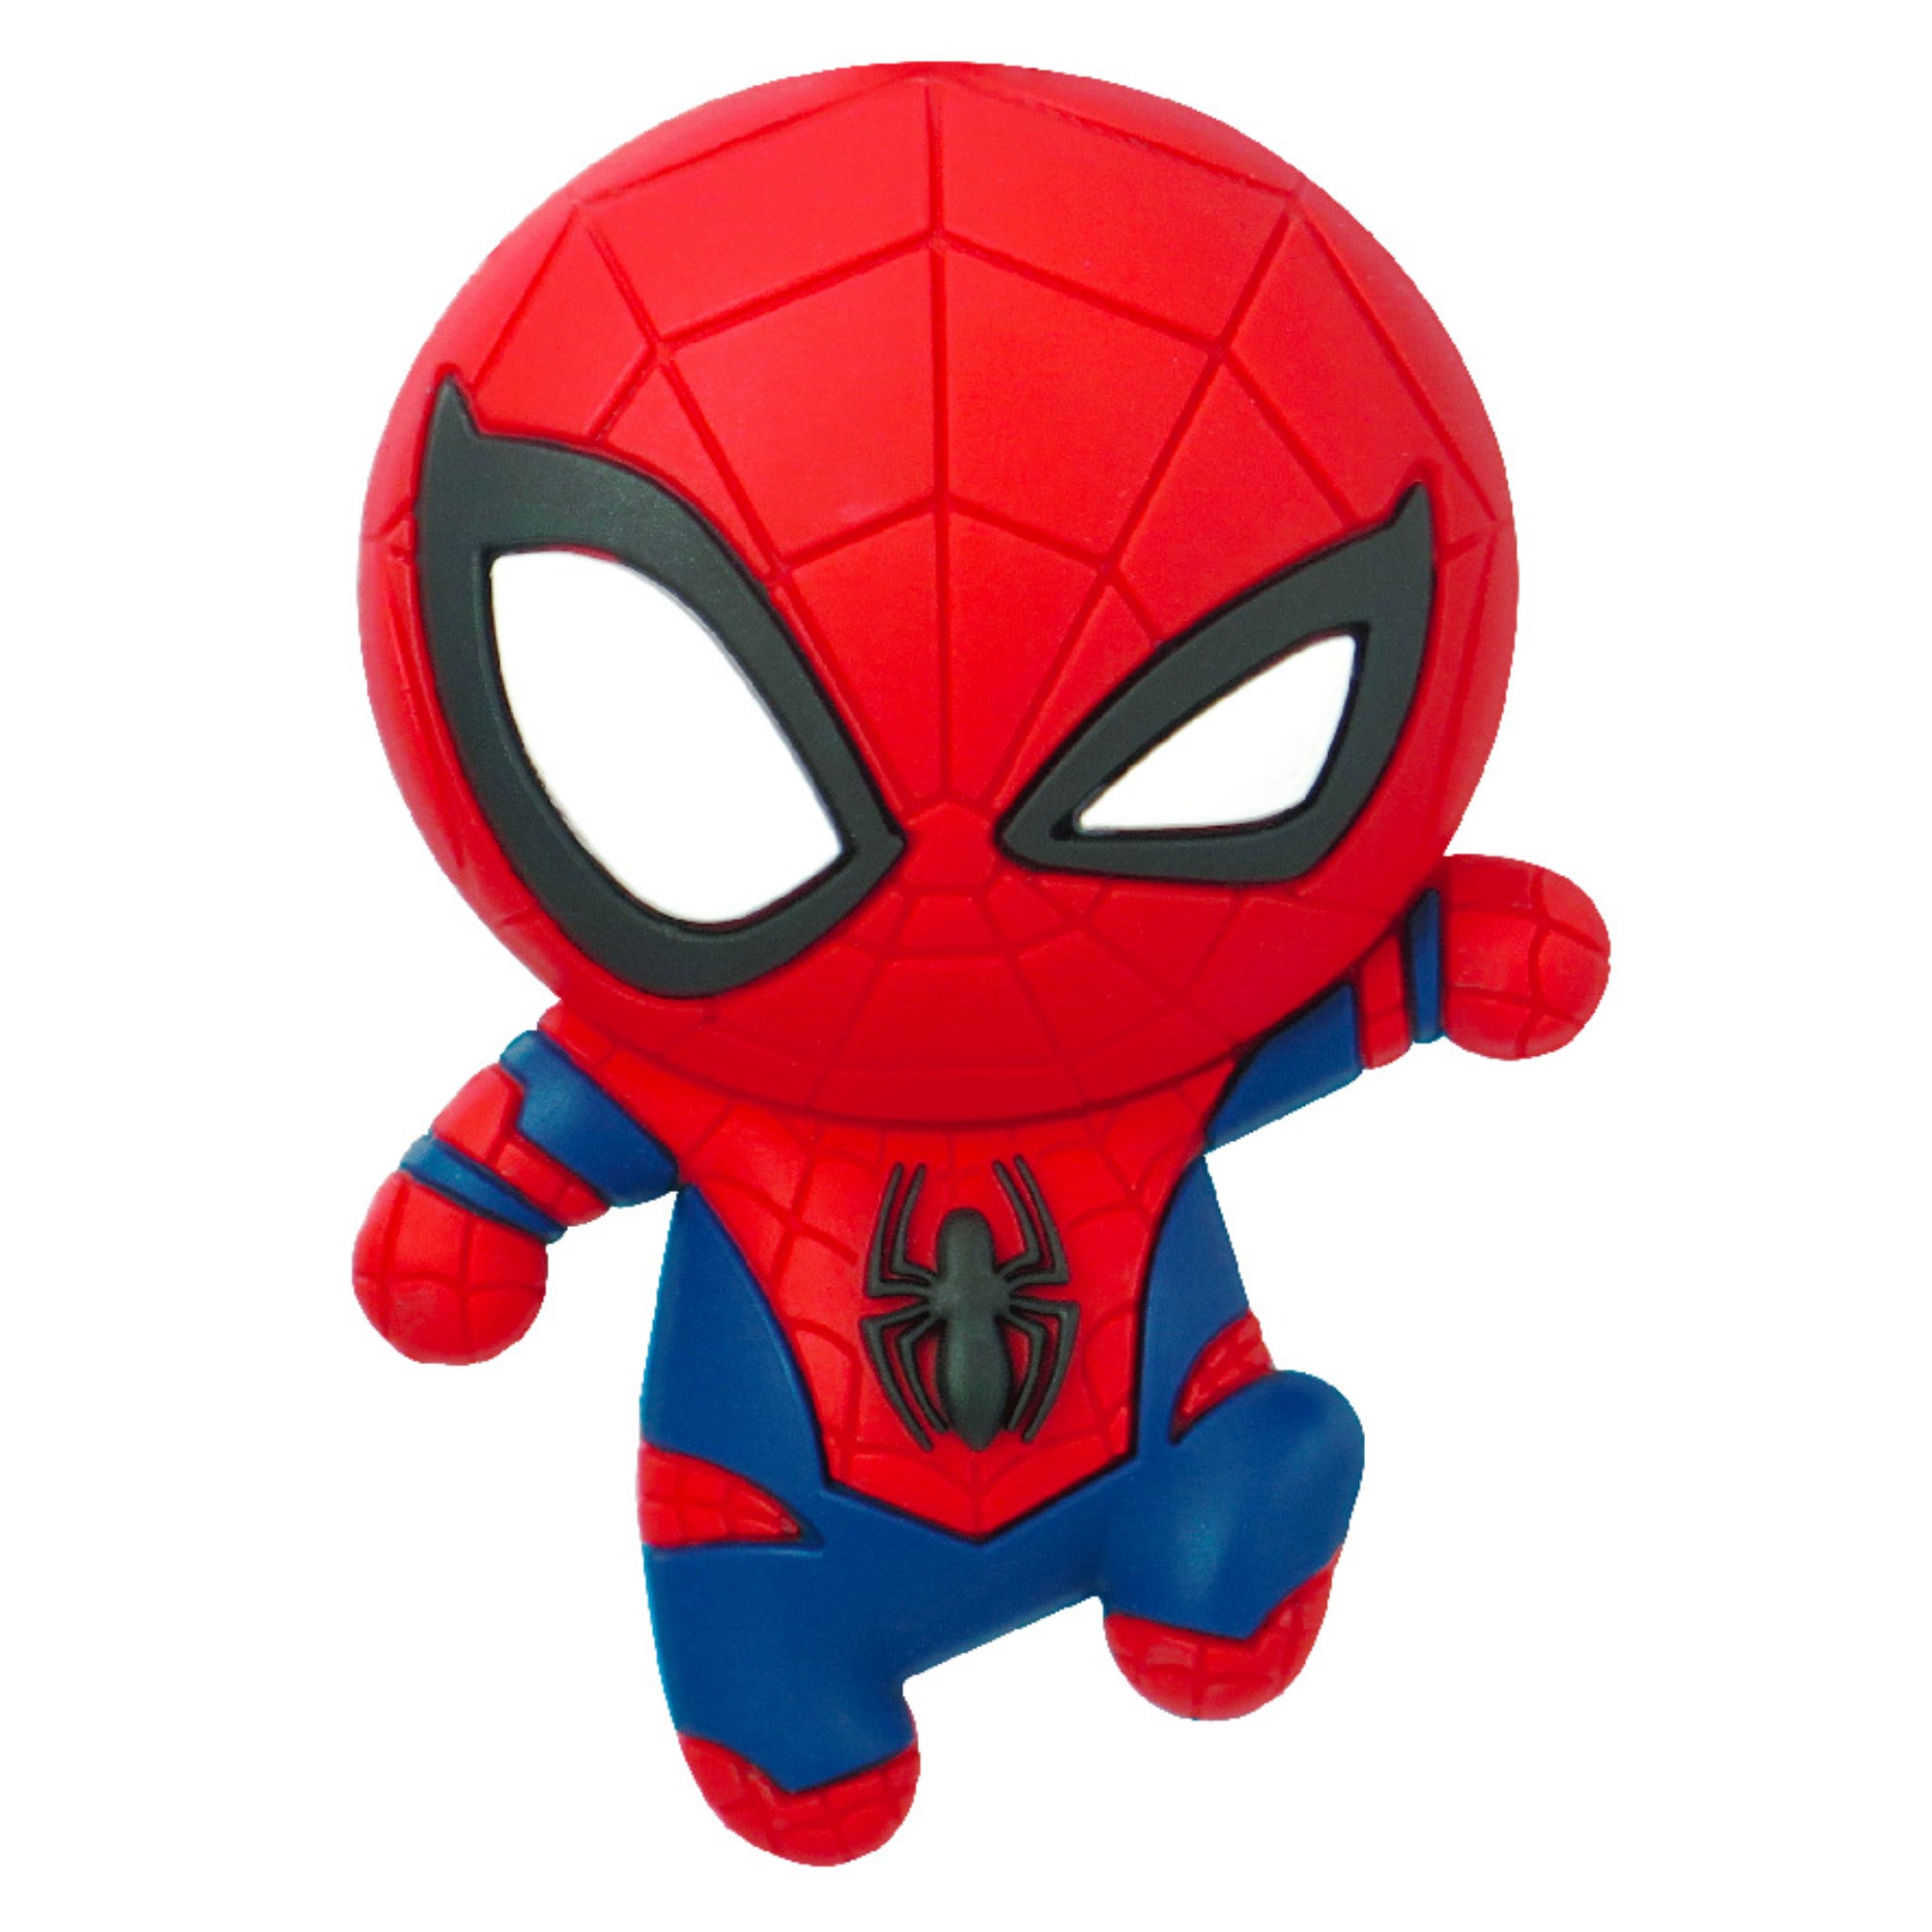 Spider-Man 3D Magnet